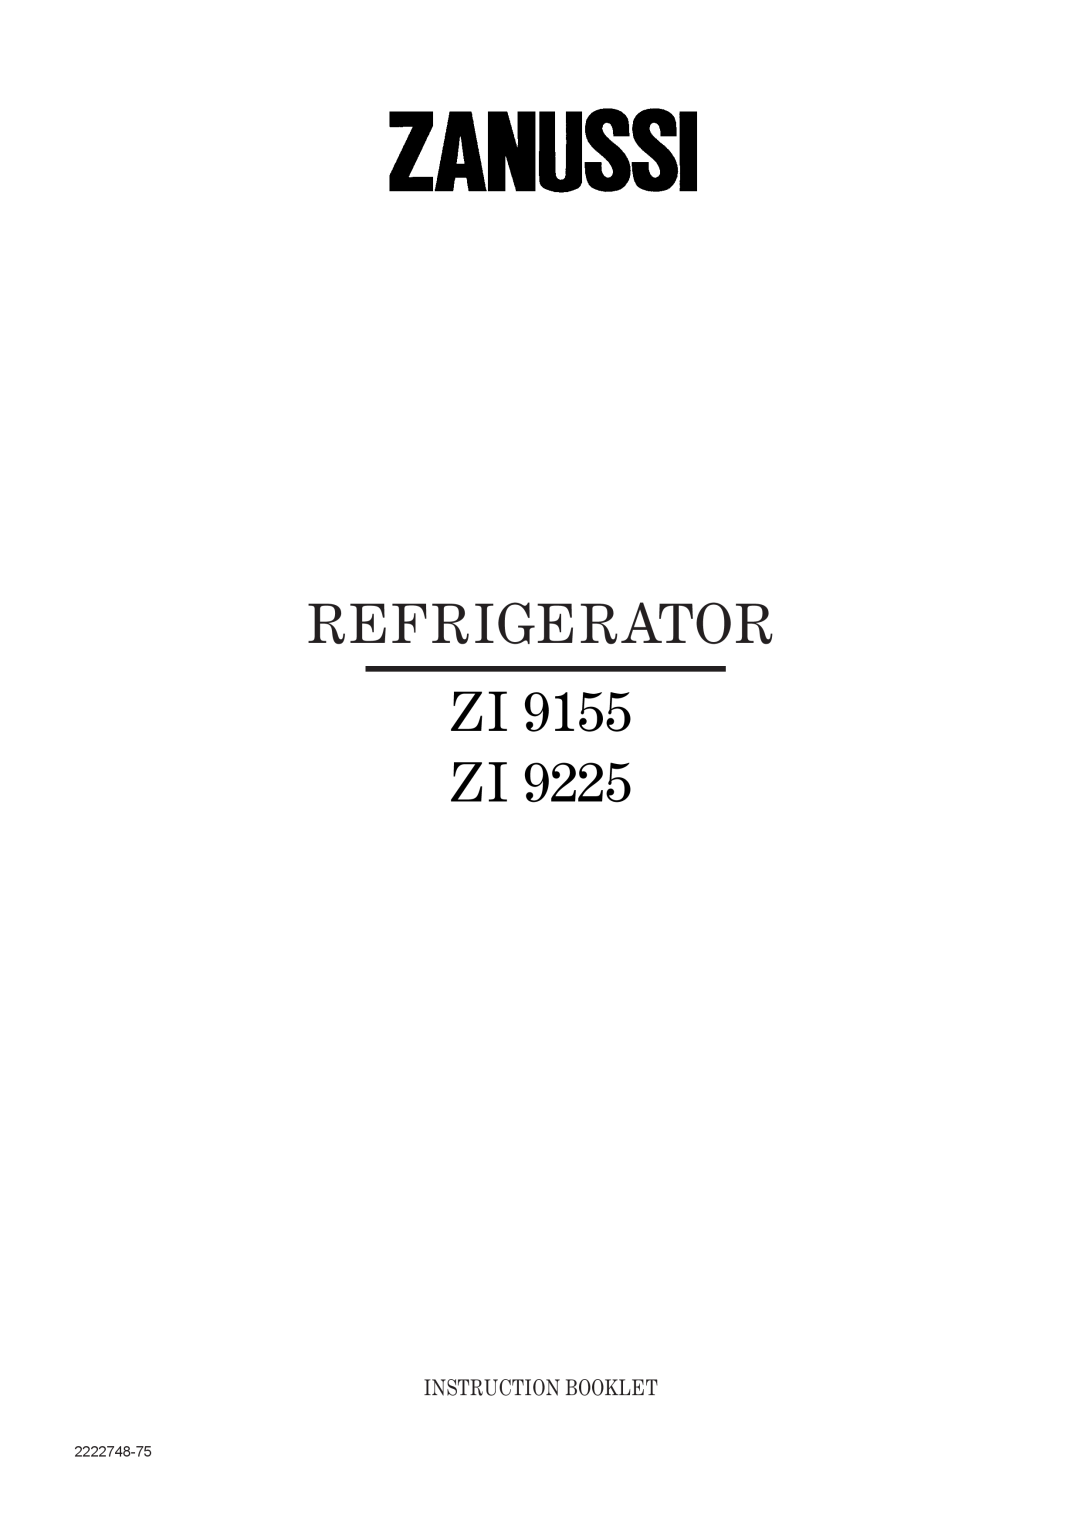 Zanussi ZI 9225 manual Refrigerator, ZI 9155 ZI, Instruction Booklet, 2222748-75 